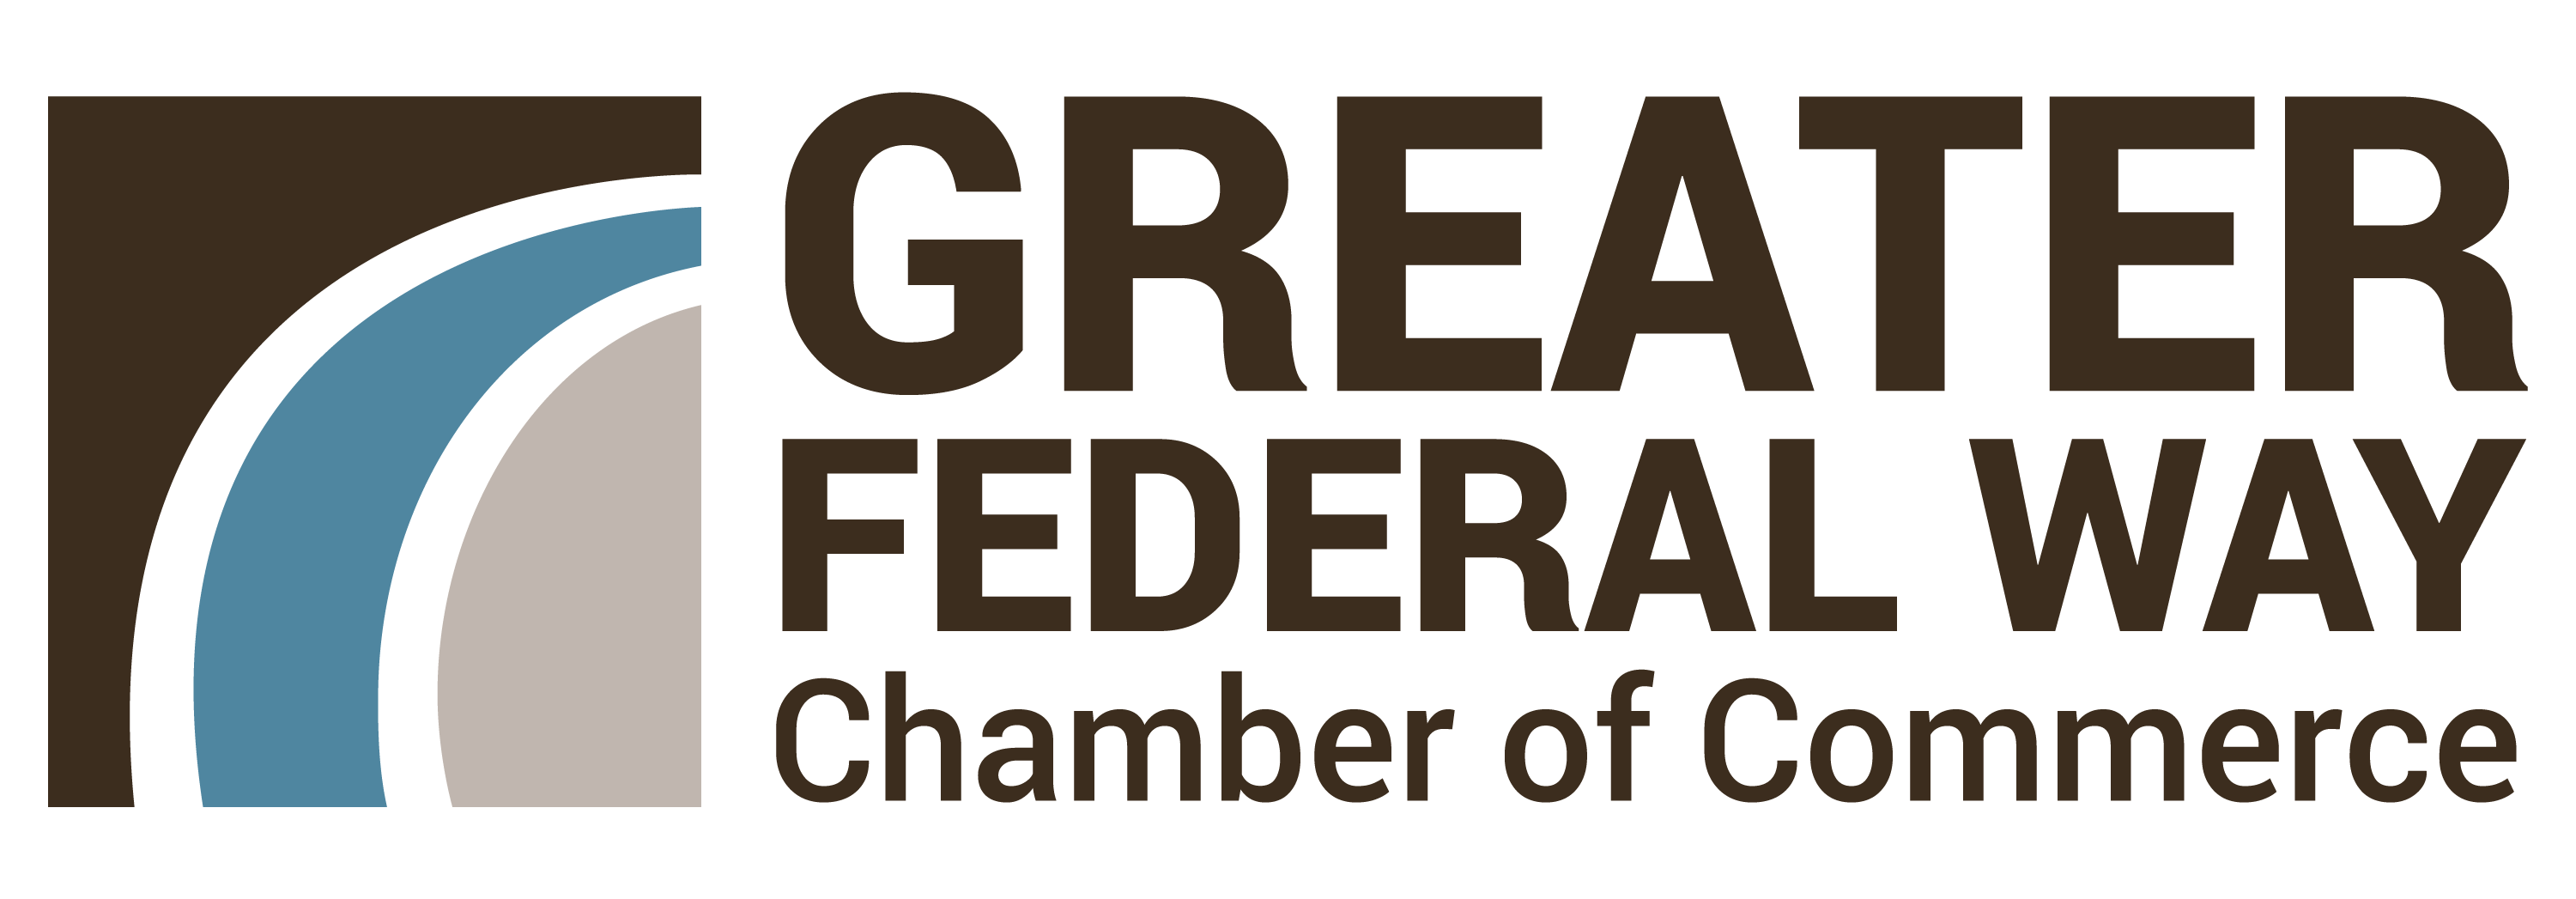 FW Chamber Logo 600dpi